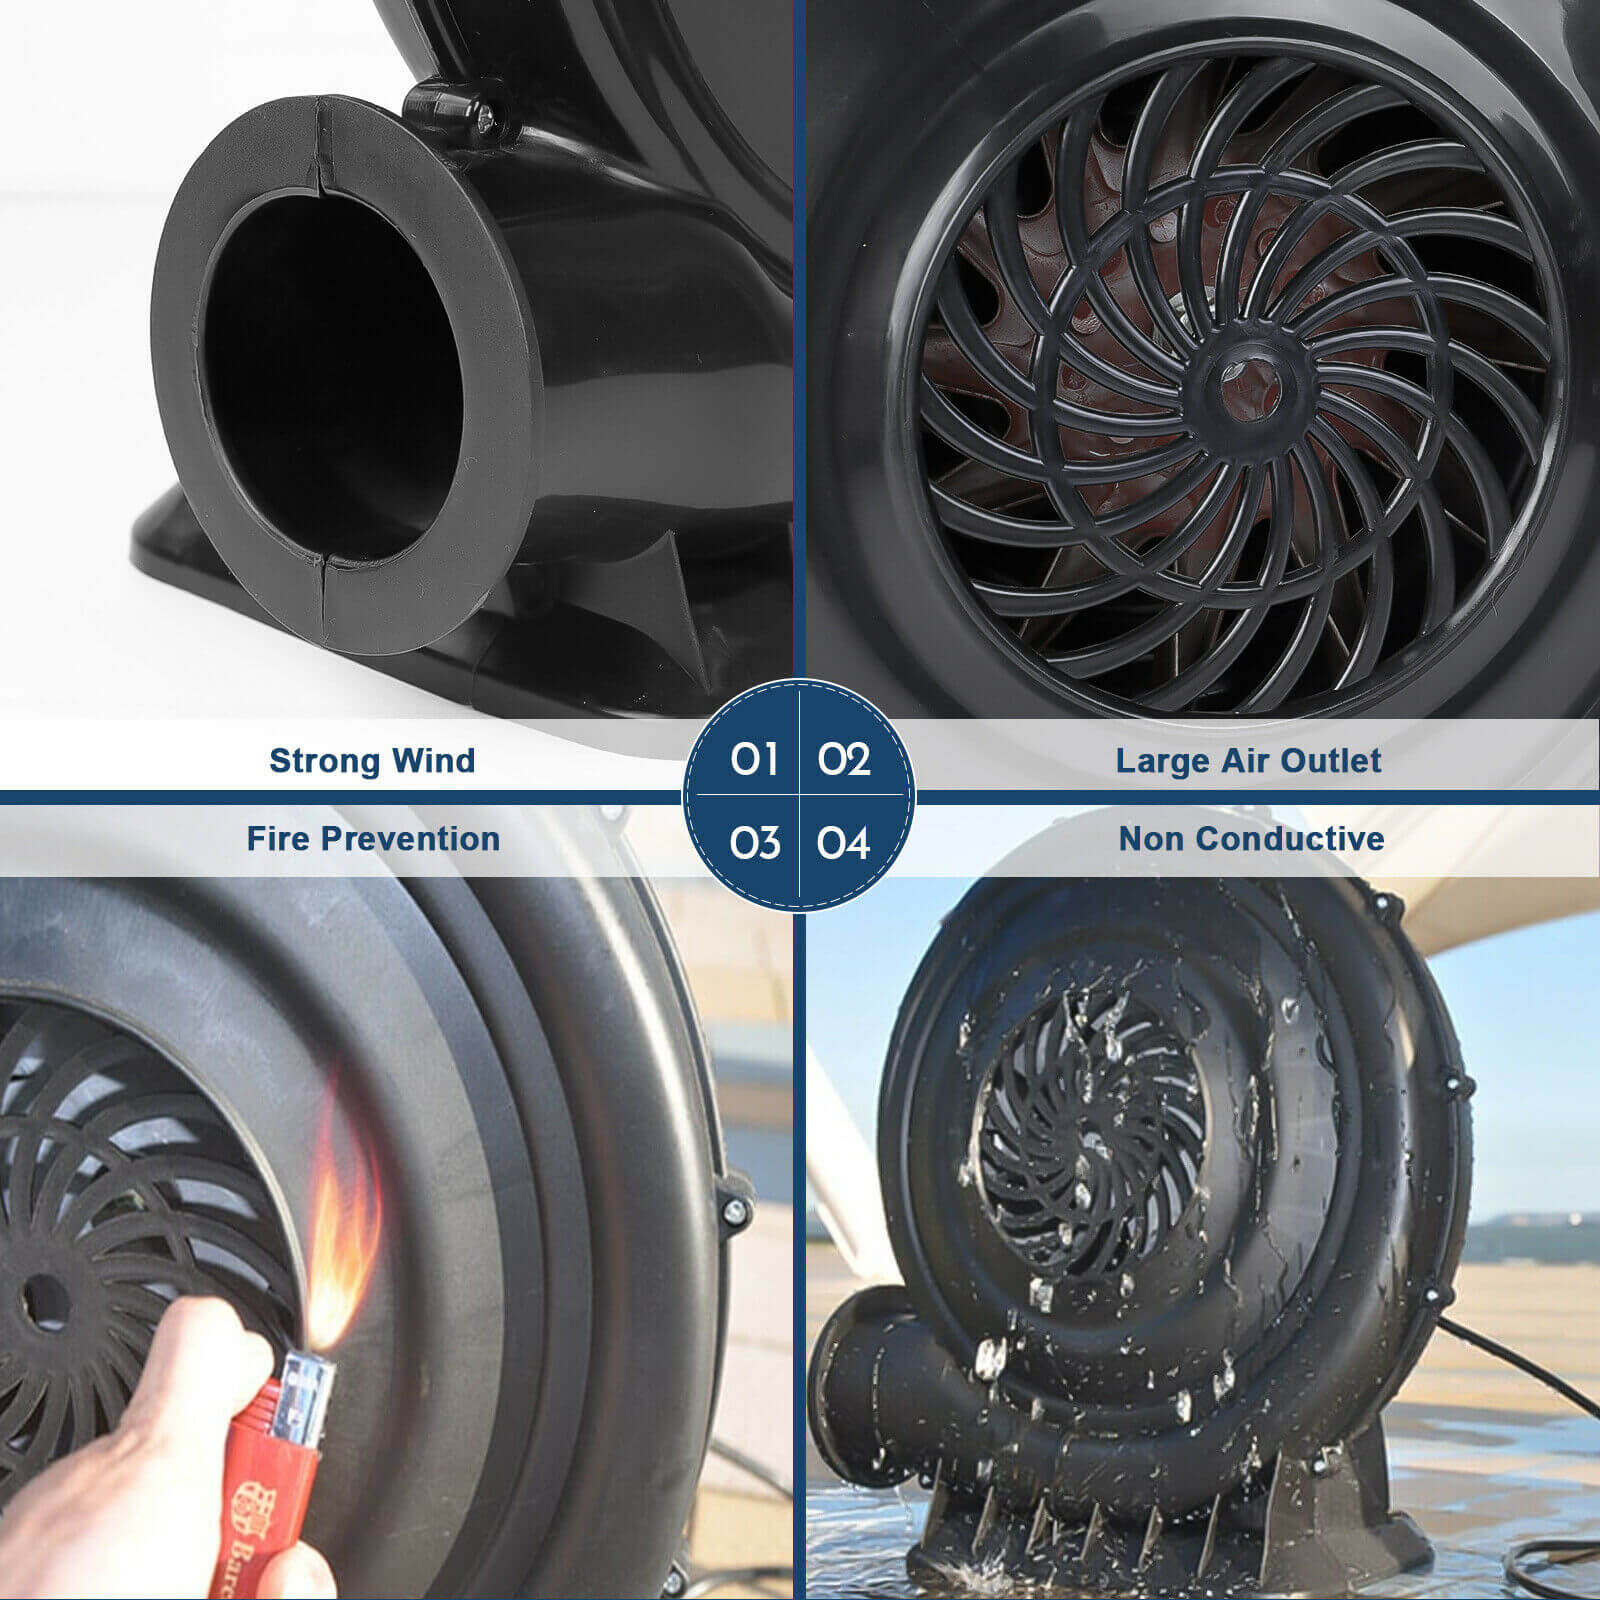 Air Blower Pump Fan feature